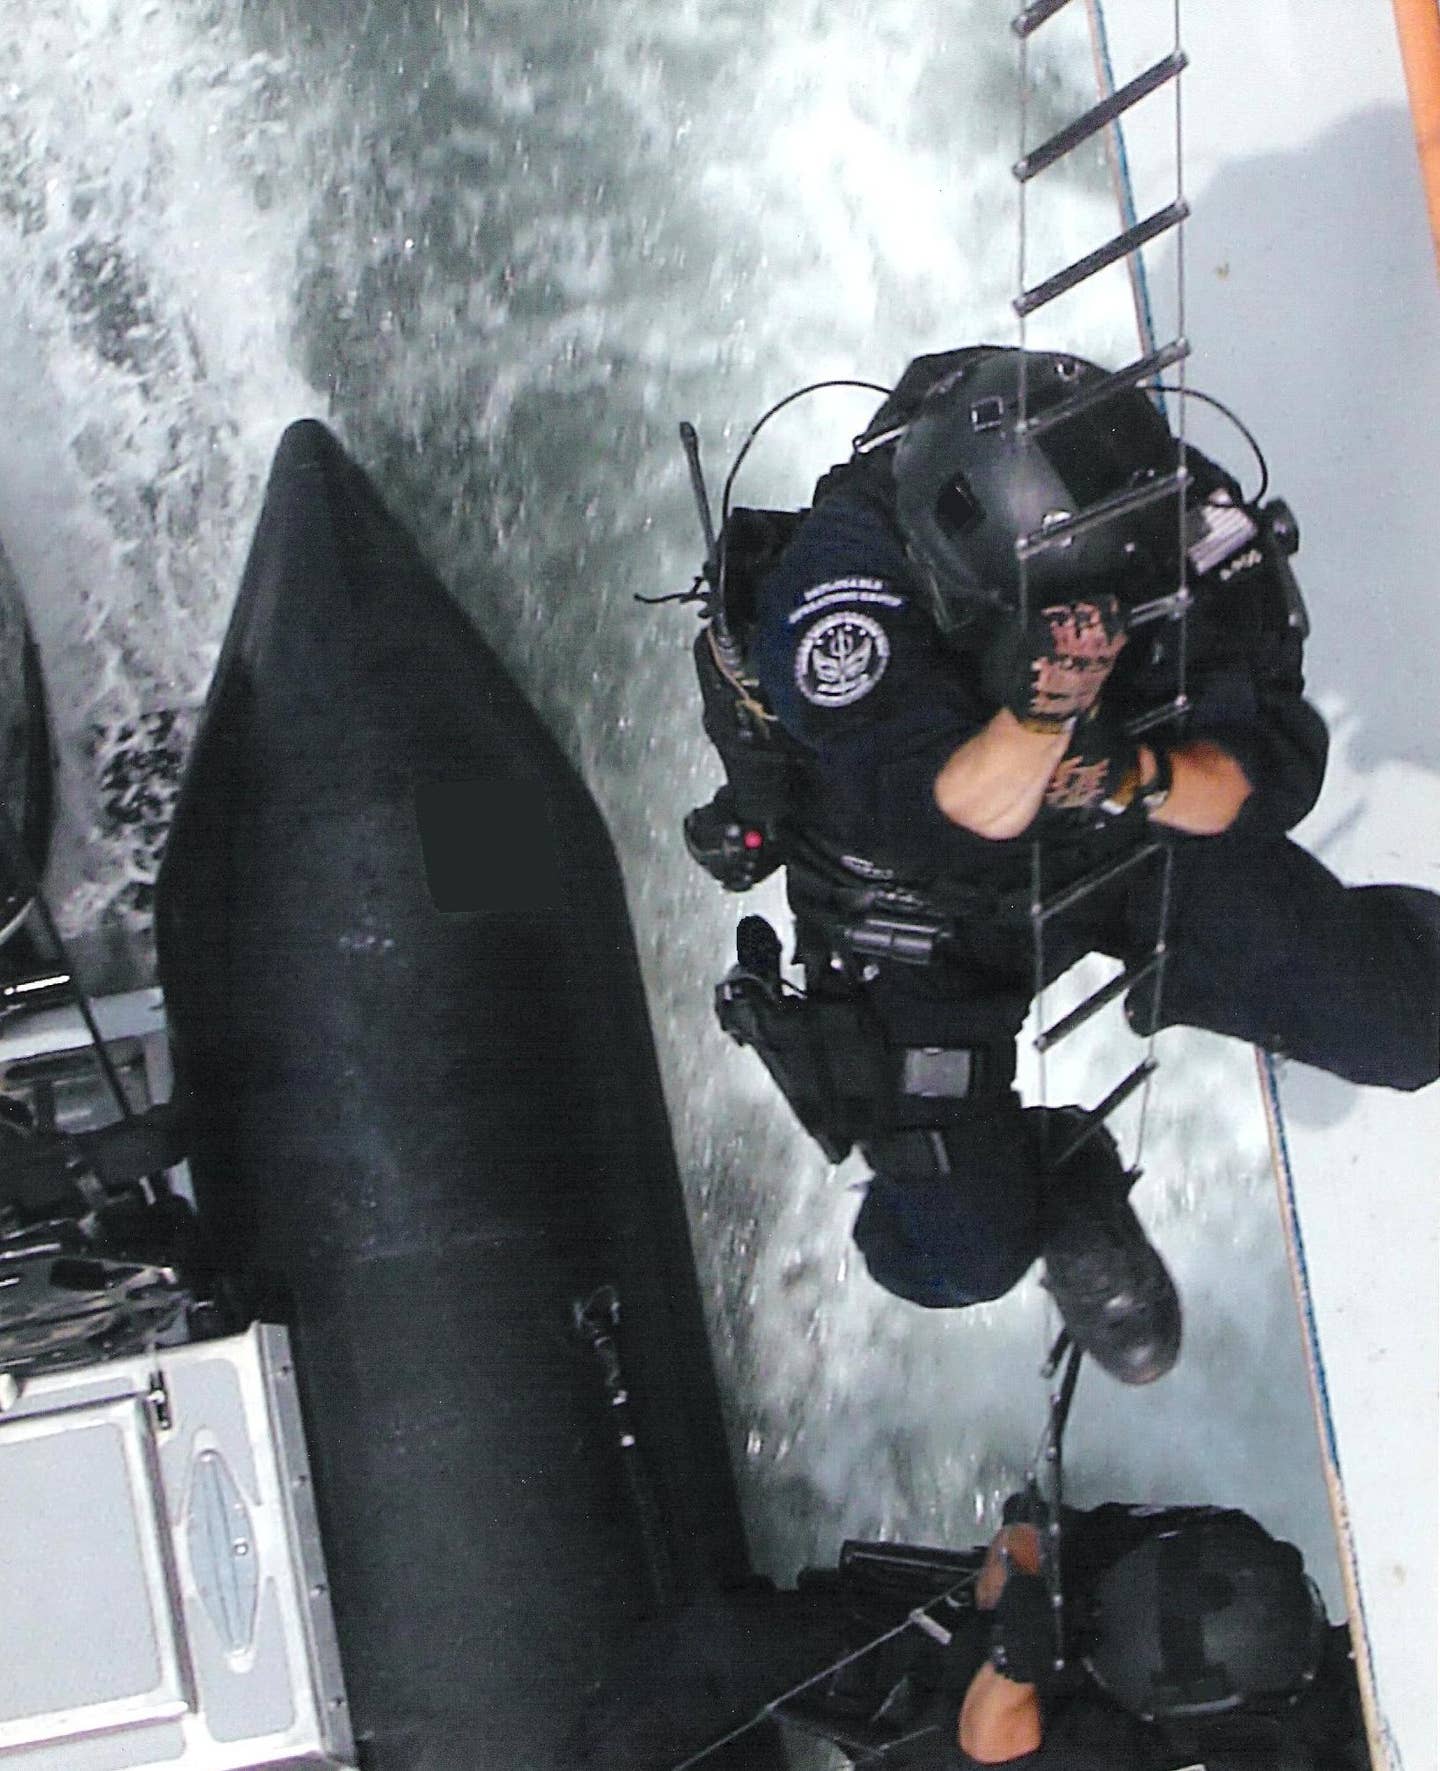 A member of the Coast Guard's Maritime Security Response Team boards a vessel. (USCG photo)